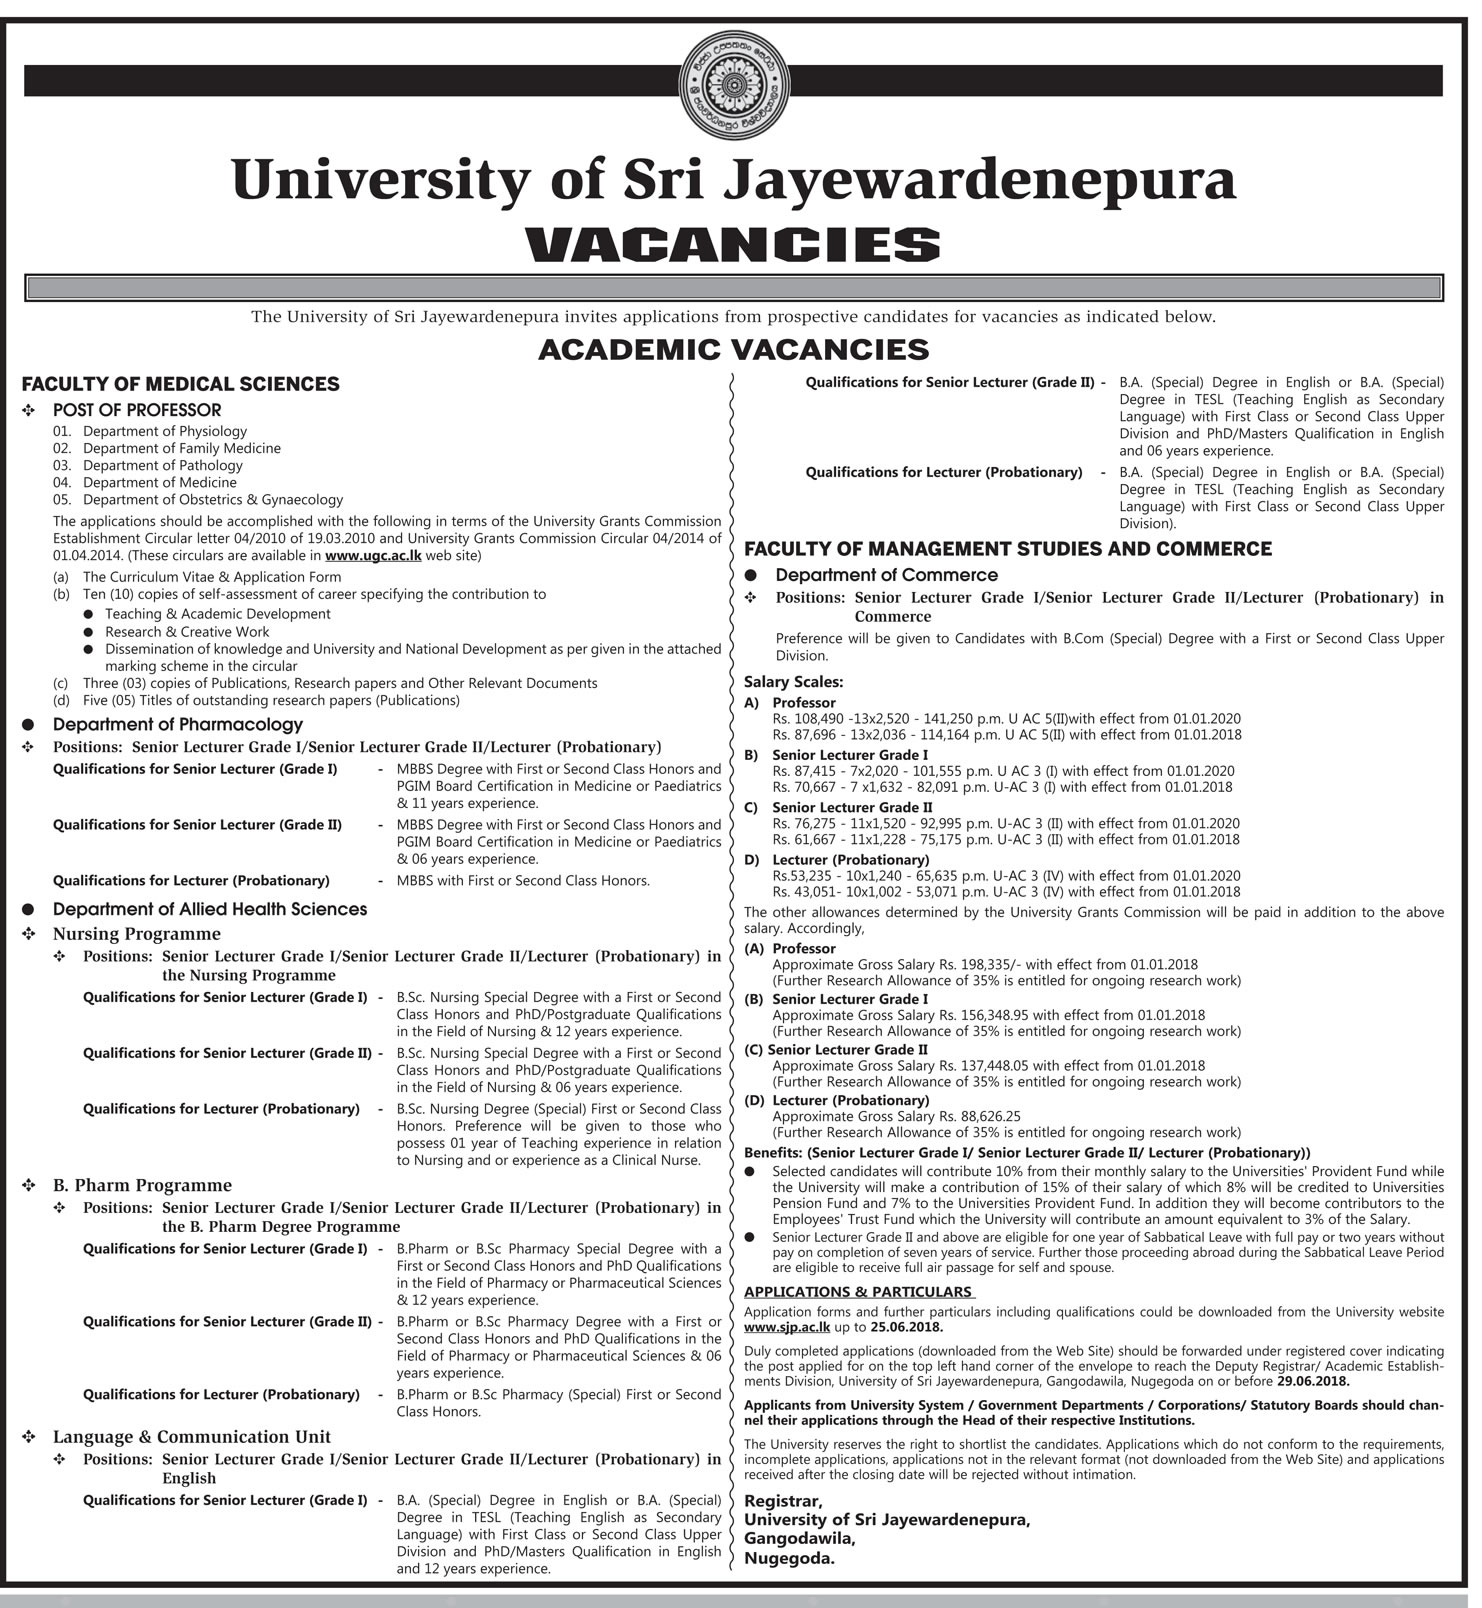 Professor / Senior Lecturer / Lecturer (Probationary) - University of Sri Jayewardenepura